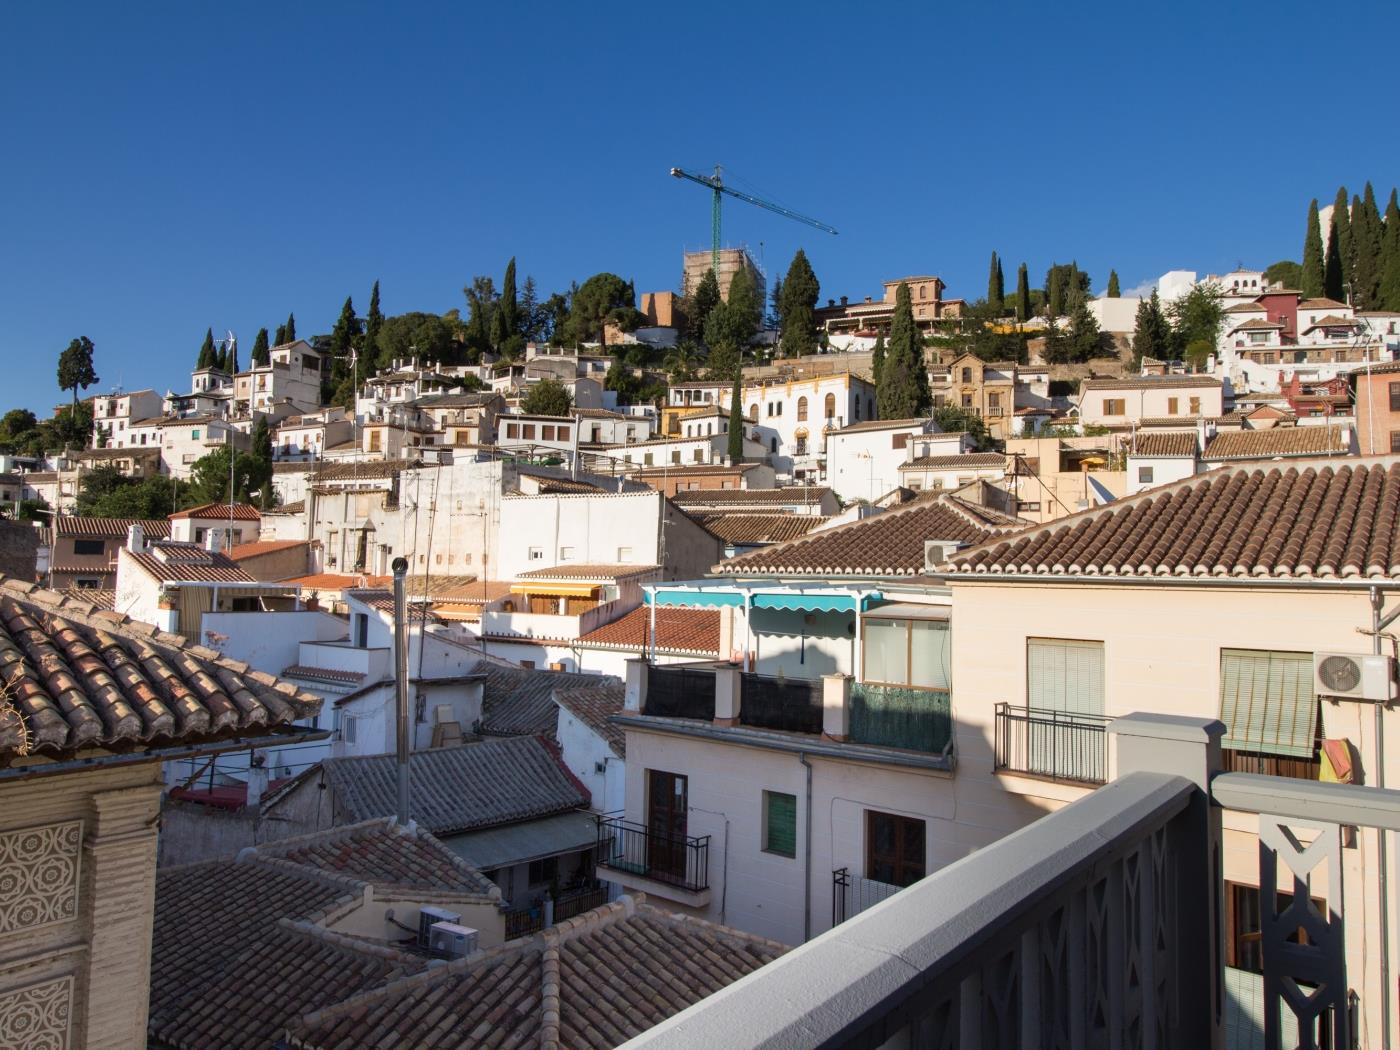 Ático Fortuny in Granada